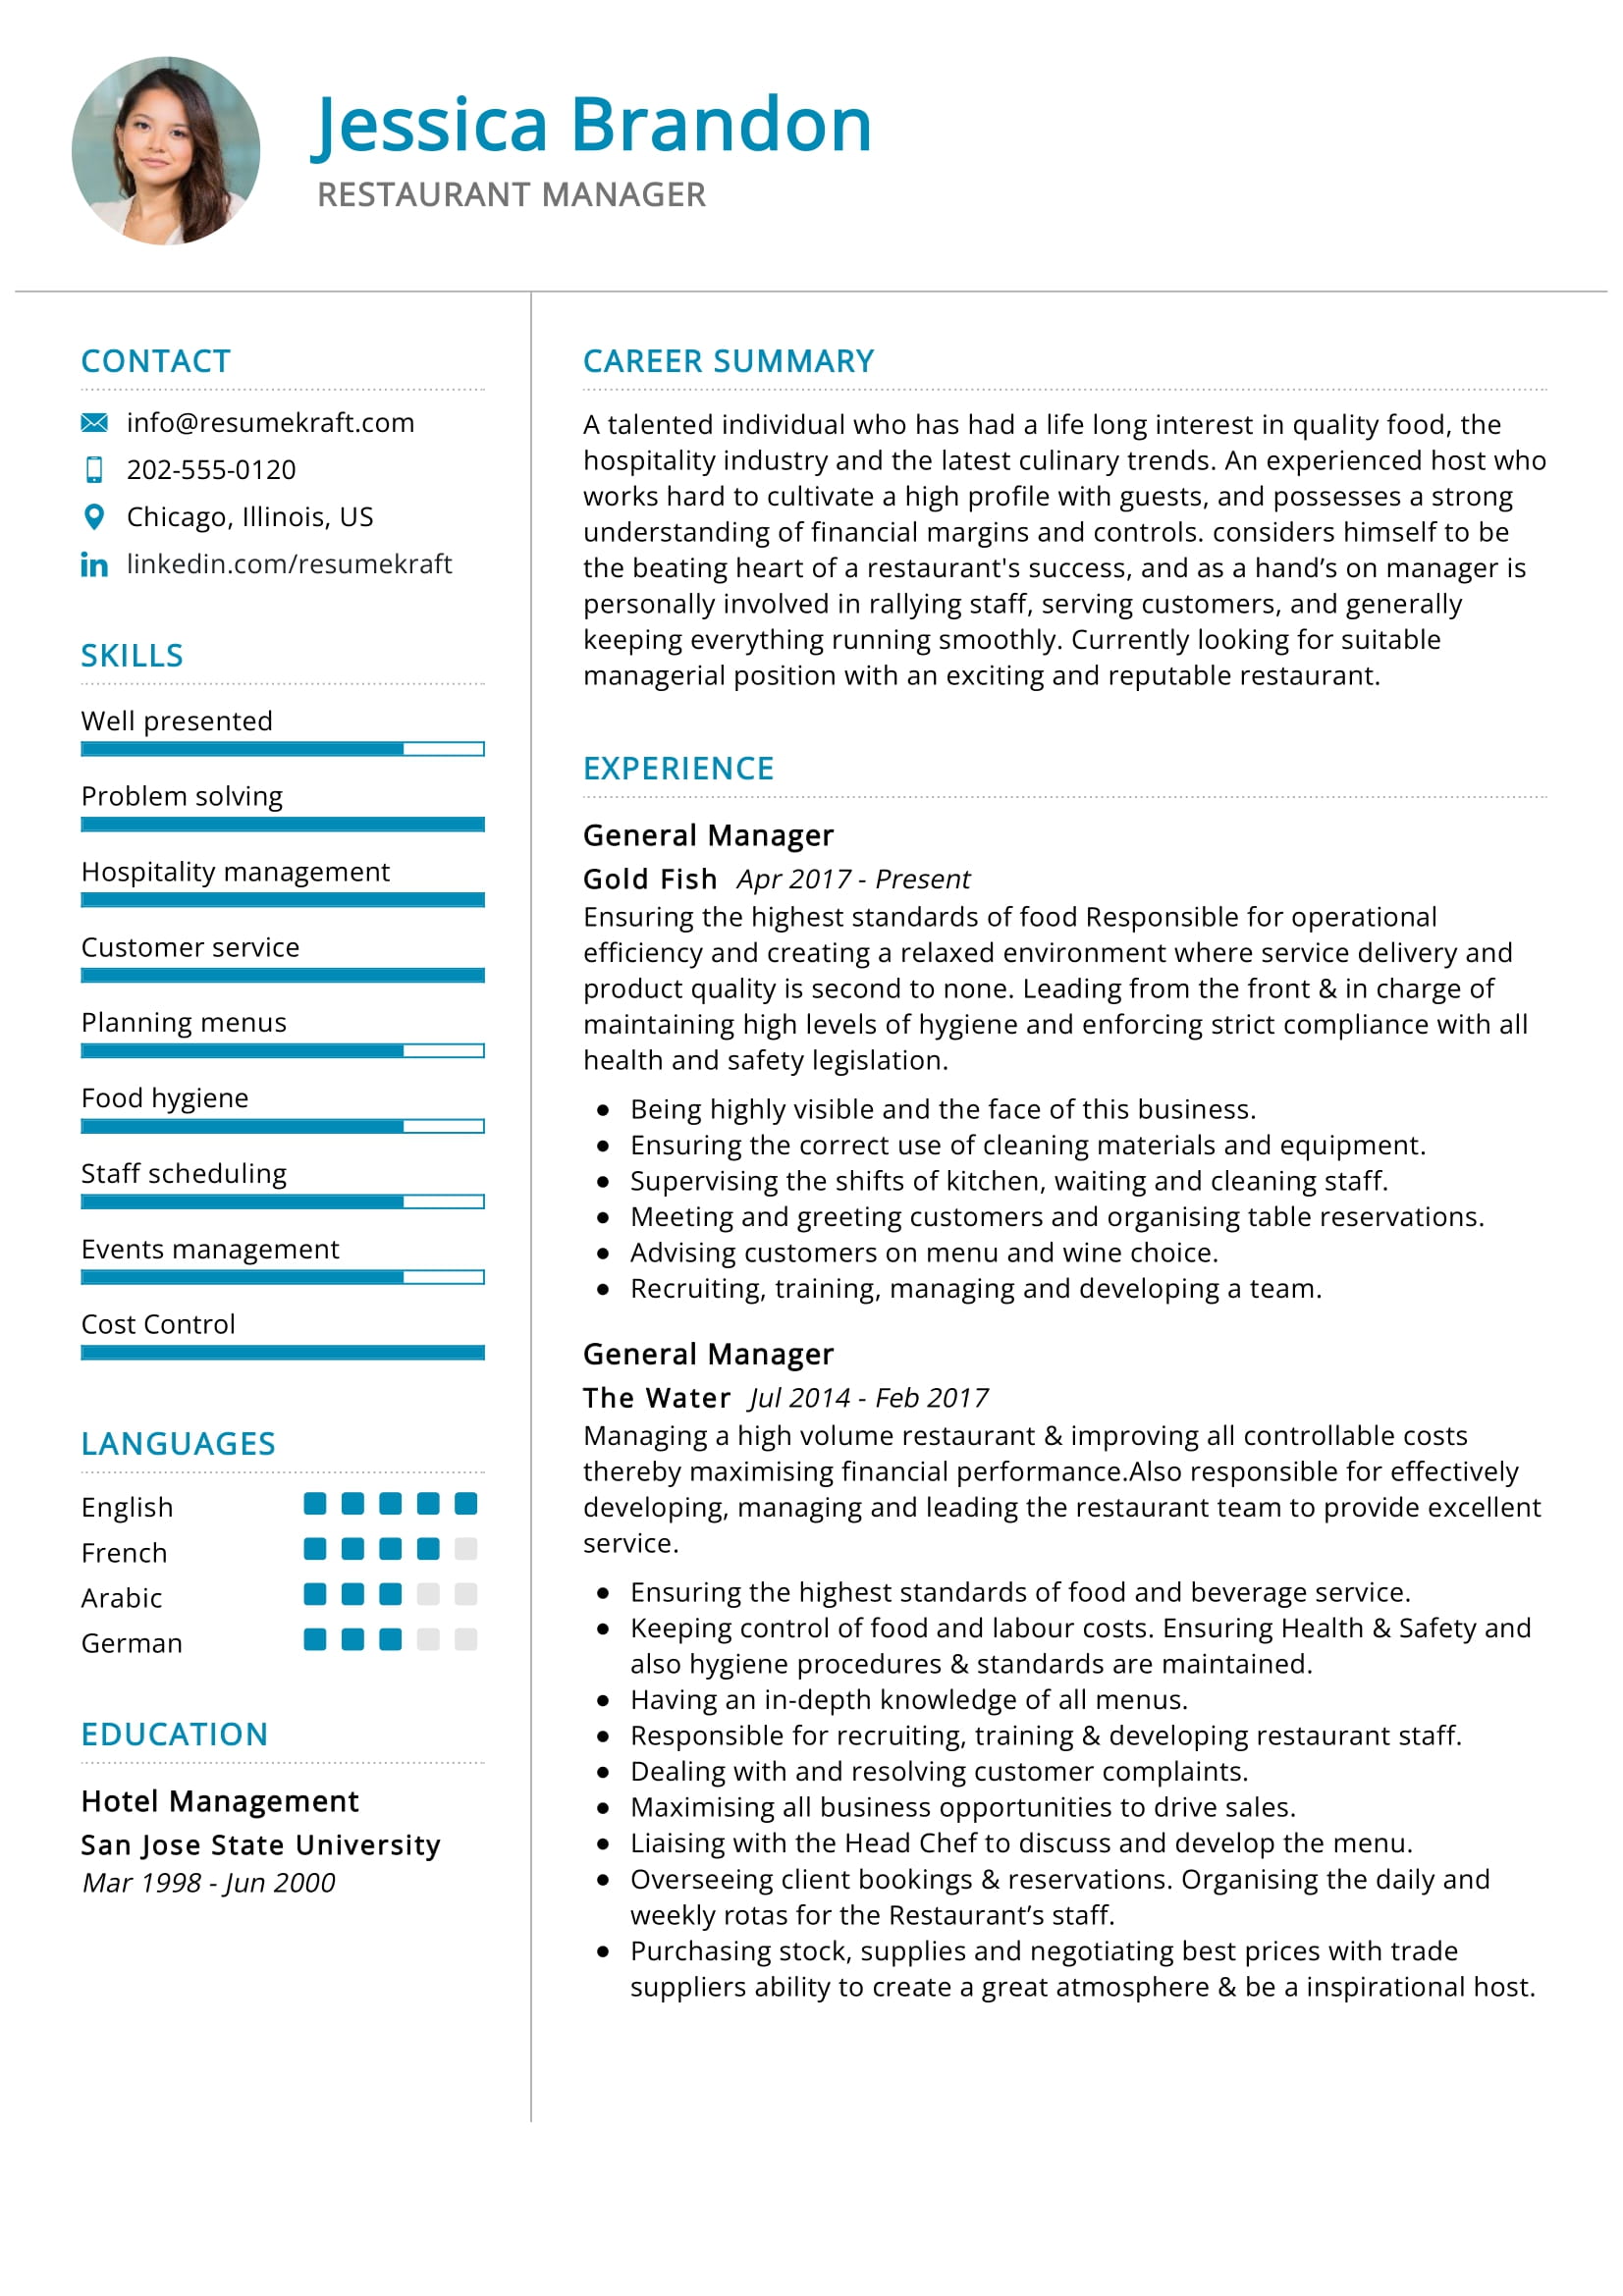 resume for restaurant manager position